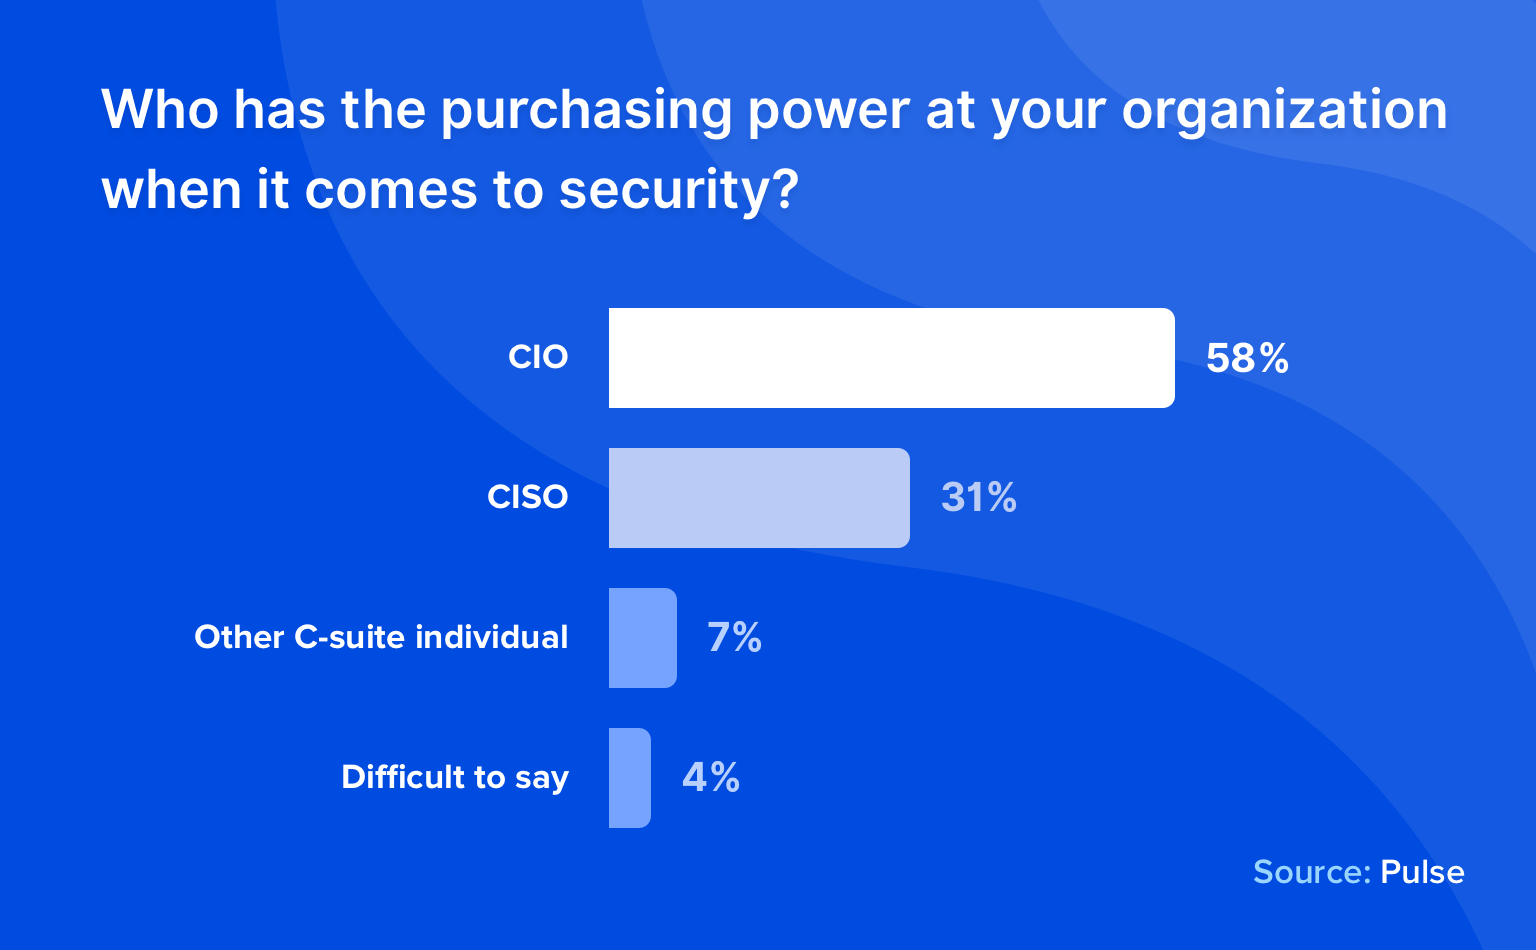 CIO purchasing power